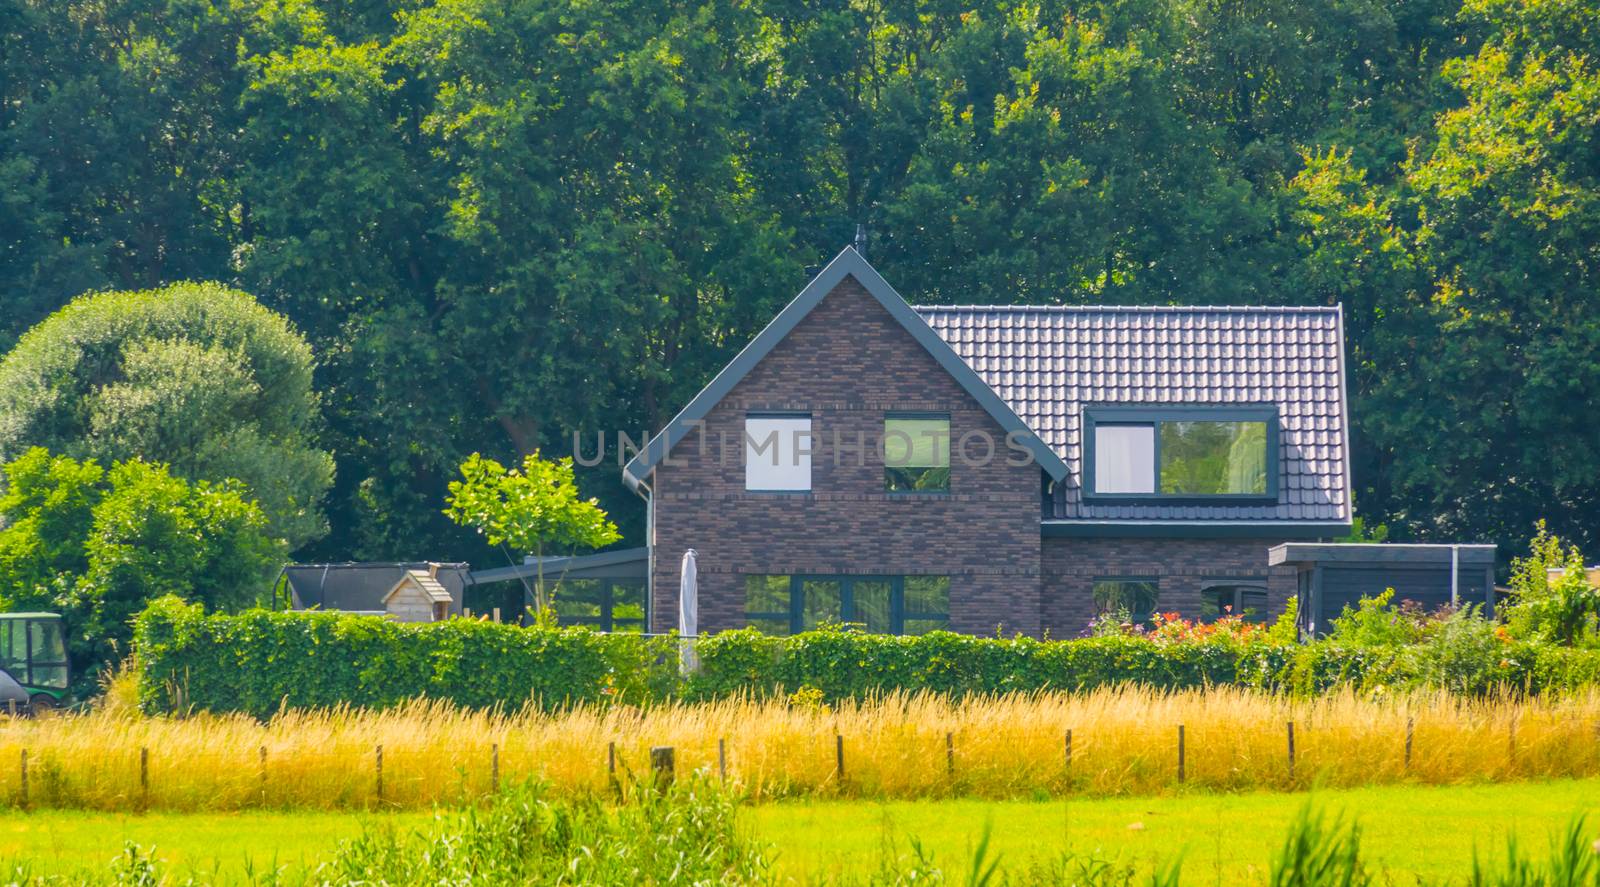 Fields with a farm house, Country side scenery of Bergen op zoom, The Netherlands by charlottebleijenberg